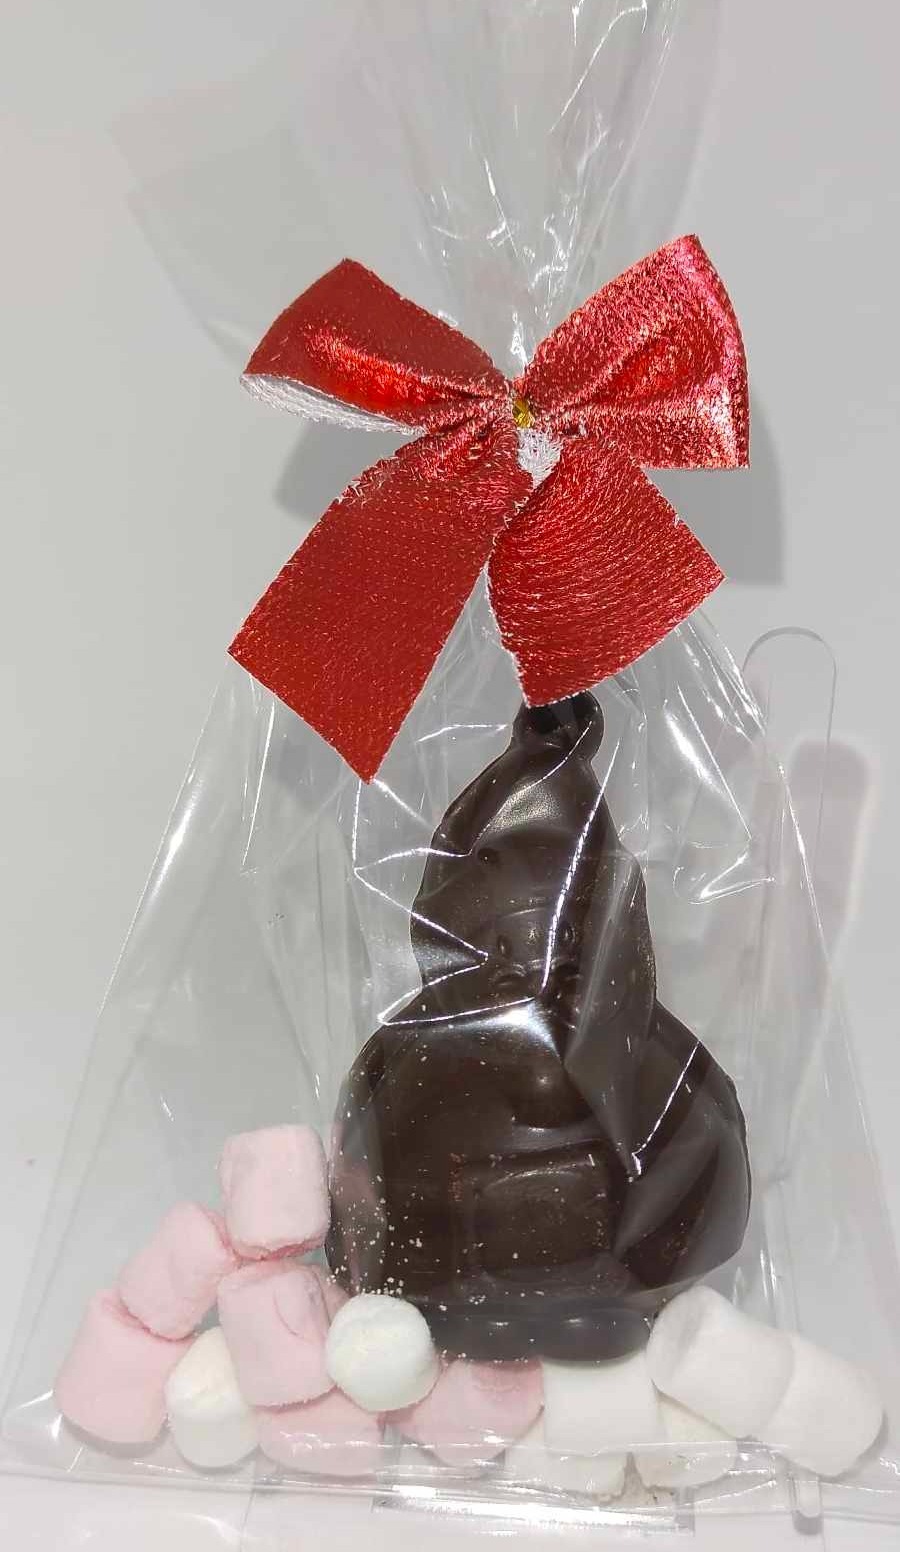 Bombe chocolat chaud artisanale Père Noël chocolat noir avec